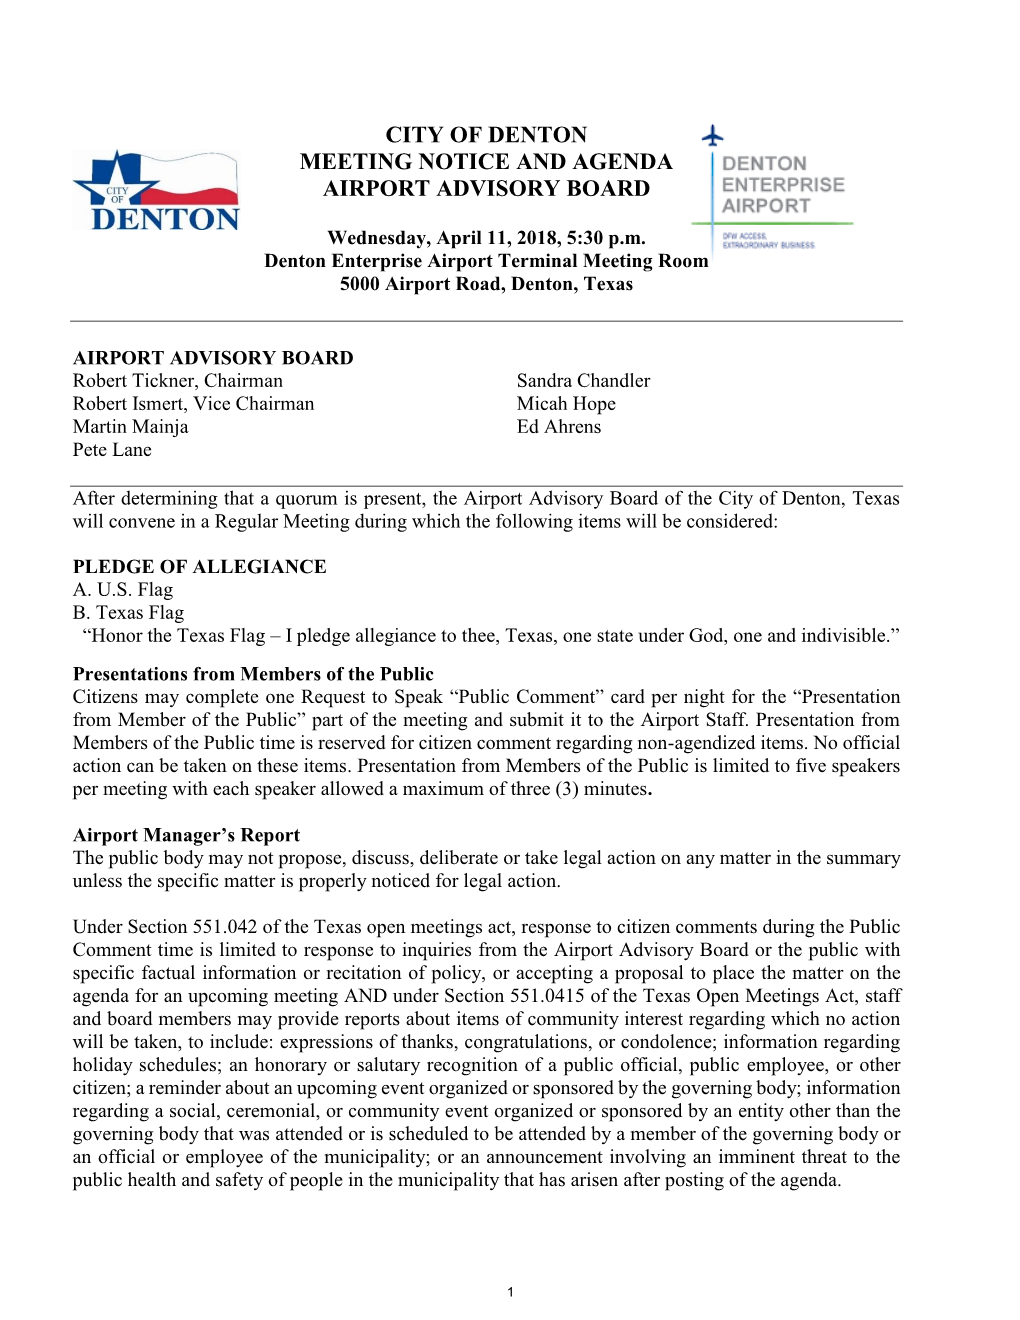 City of Denton Meeting Notice and Agenda Airport Advisory Board